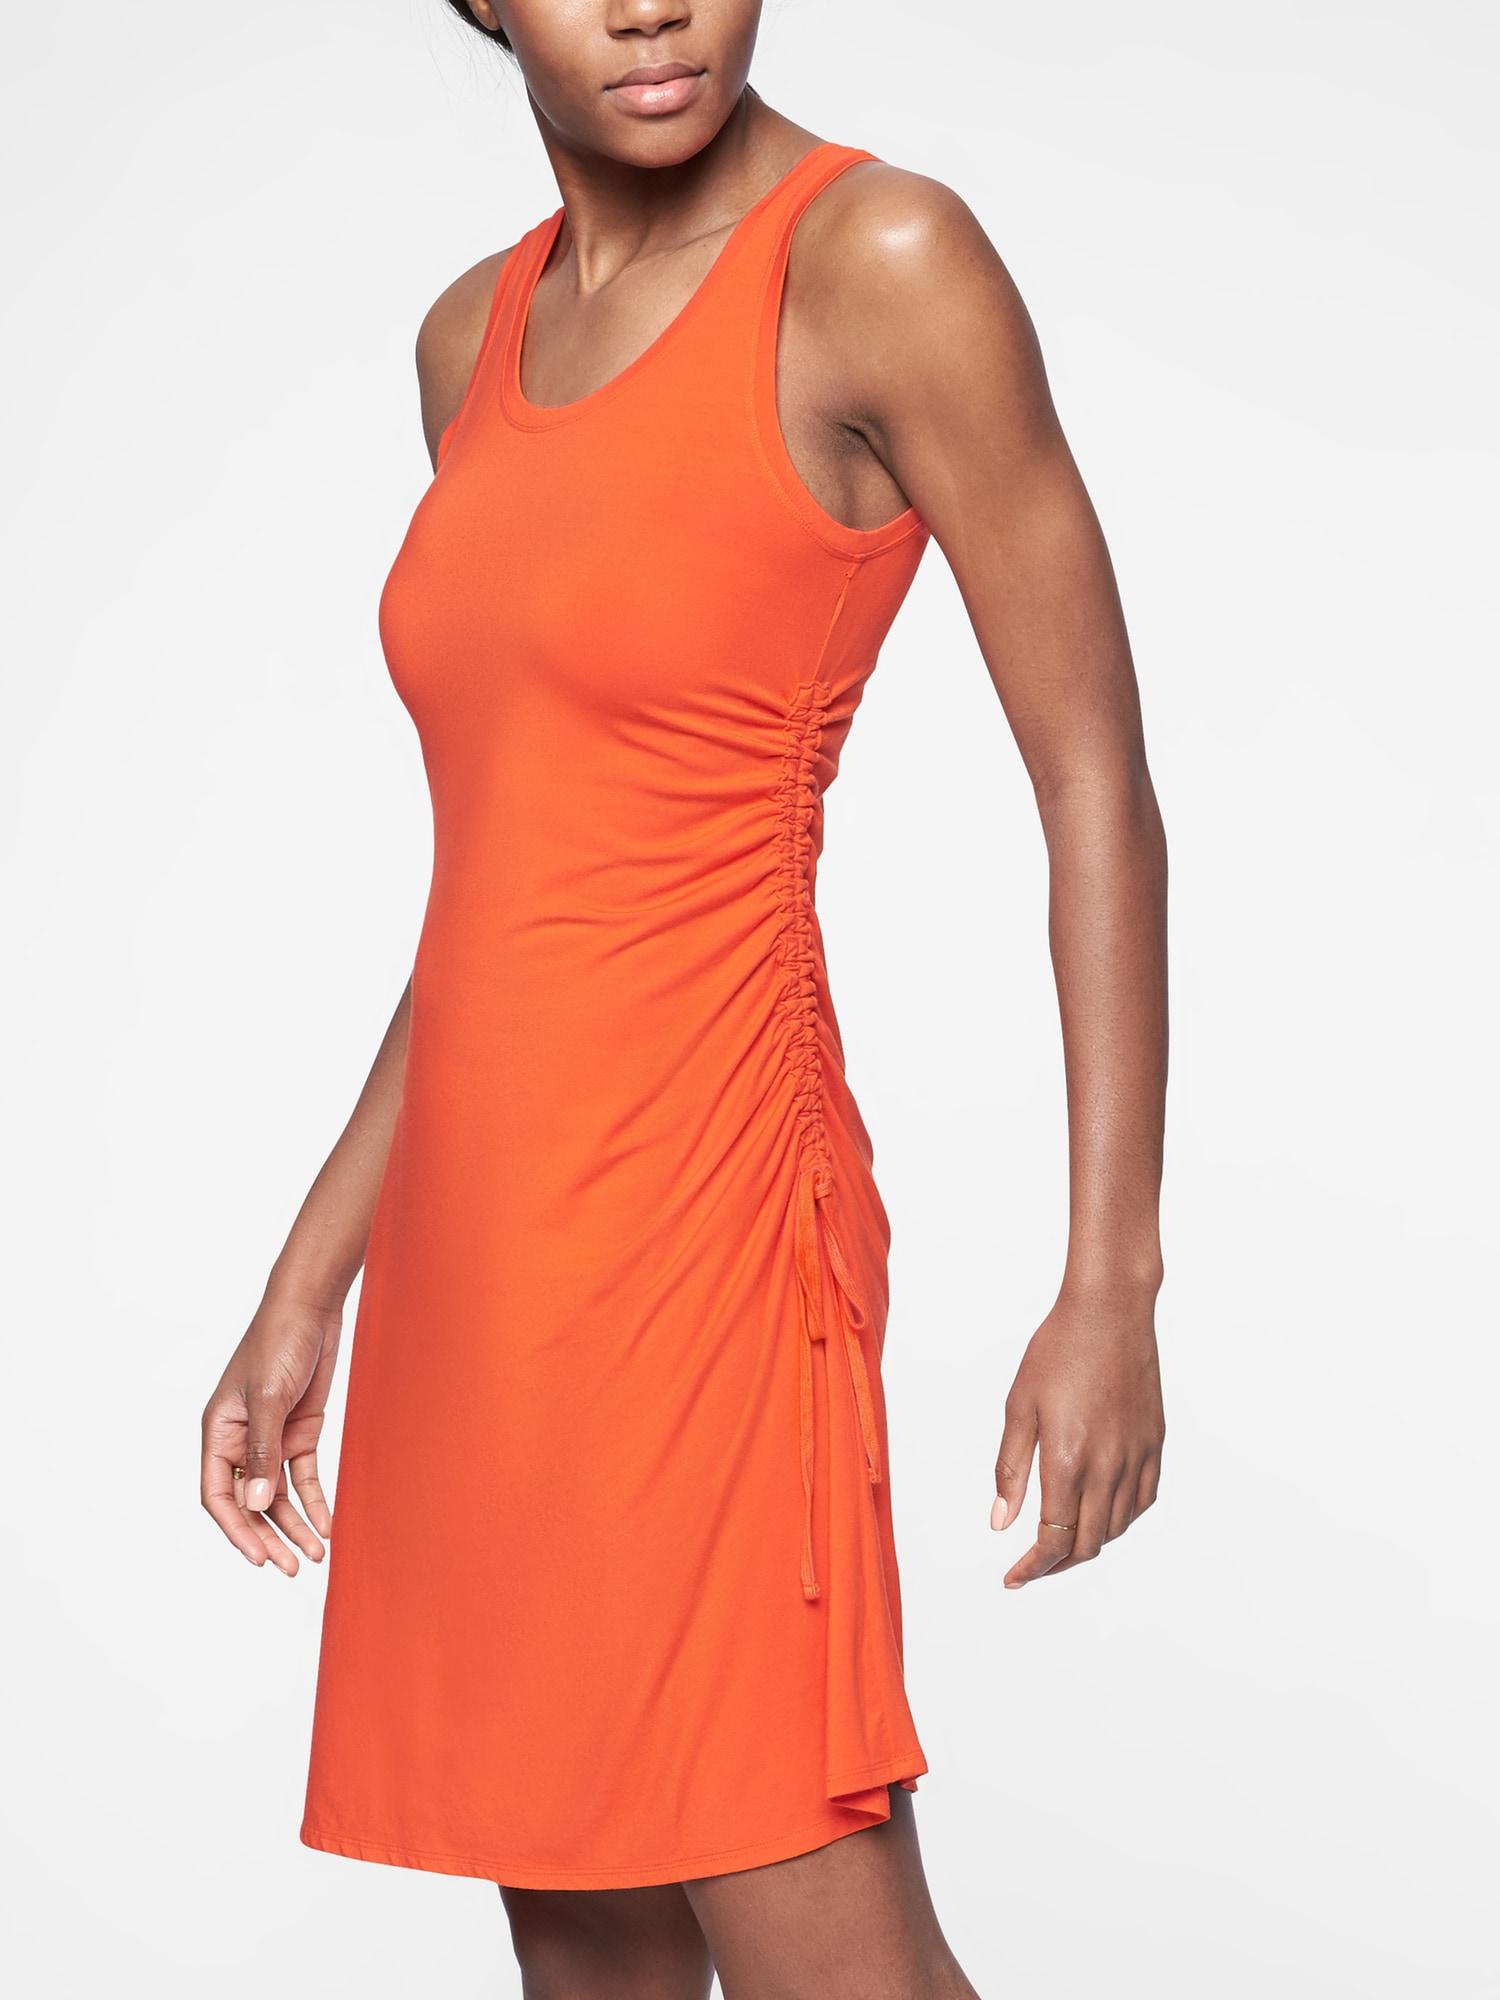 athleta orange dress